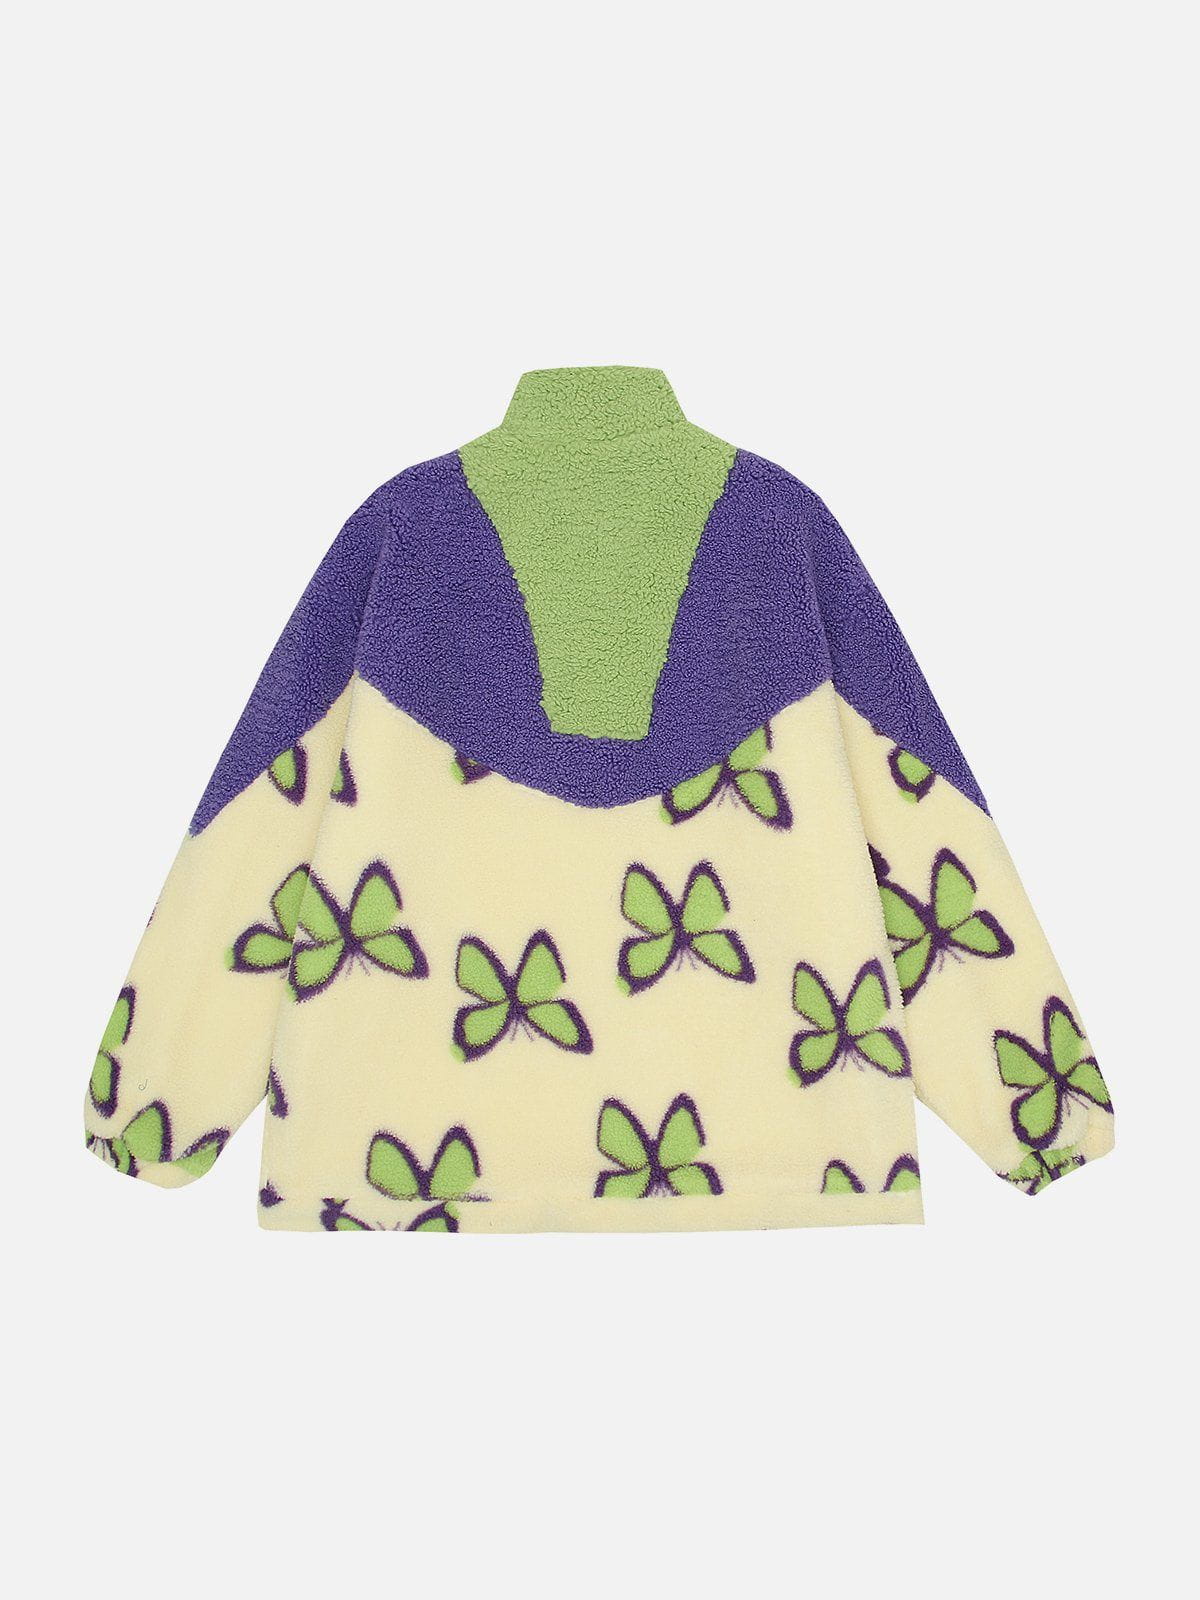 Majesda® - Paneled Butterfly Sherpa Jacket outfit ideas, streetwear fashion - majesda.com